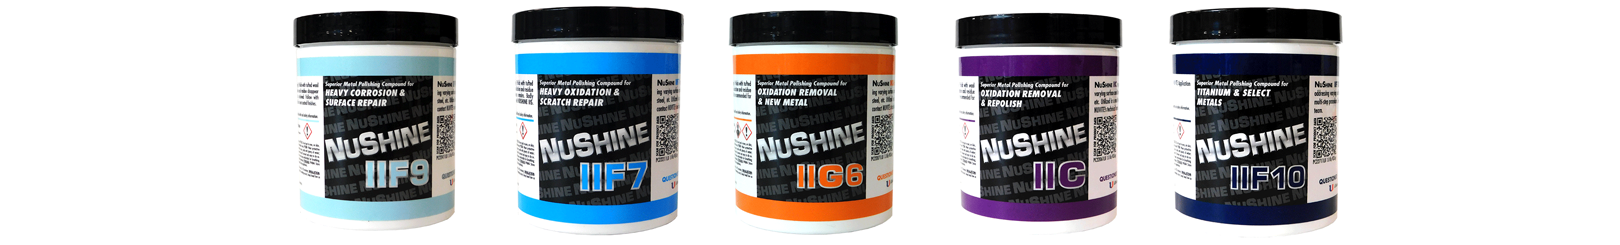 Nushine product pots lined up